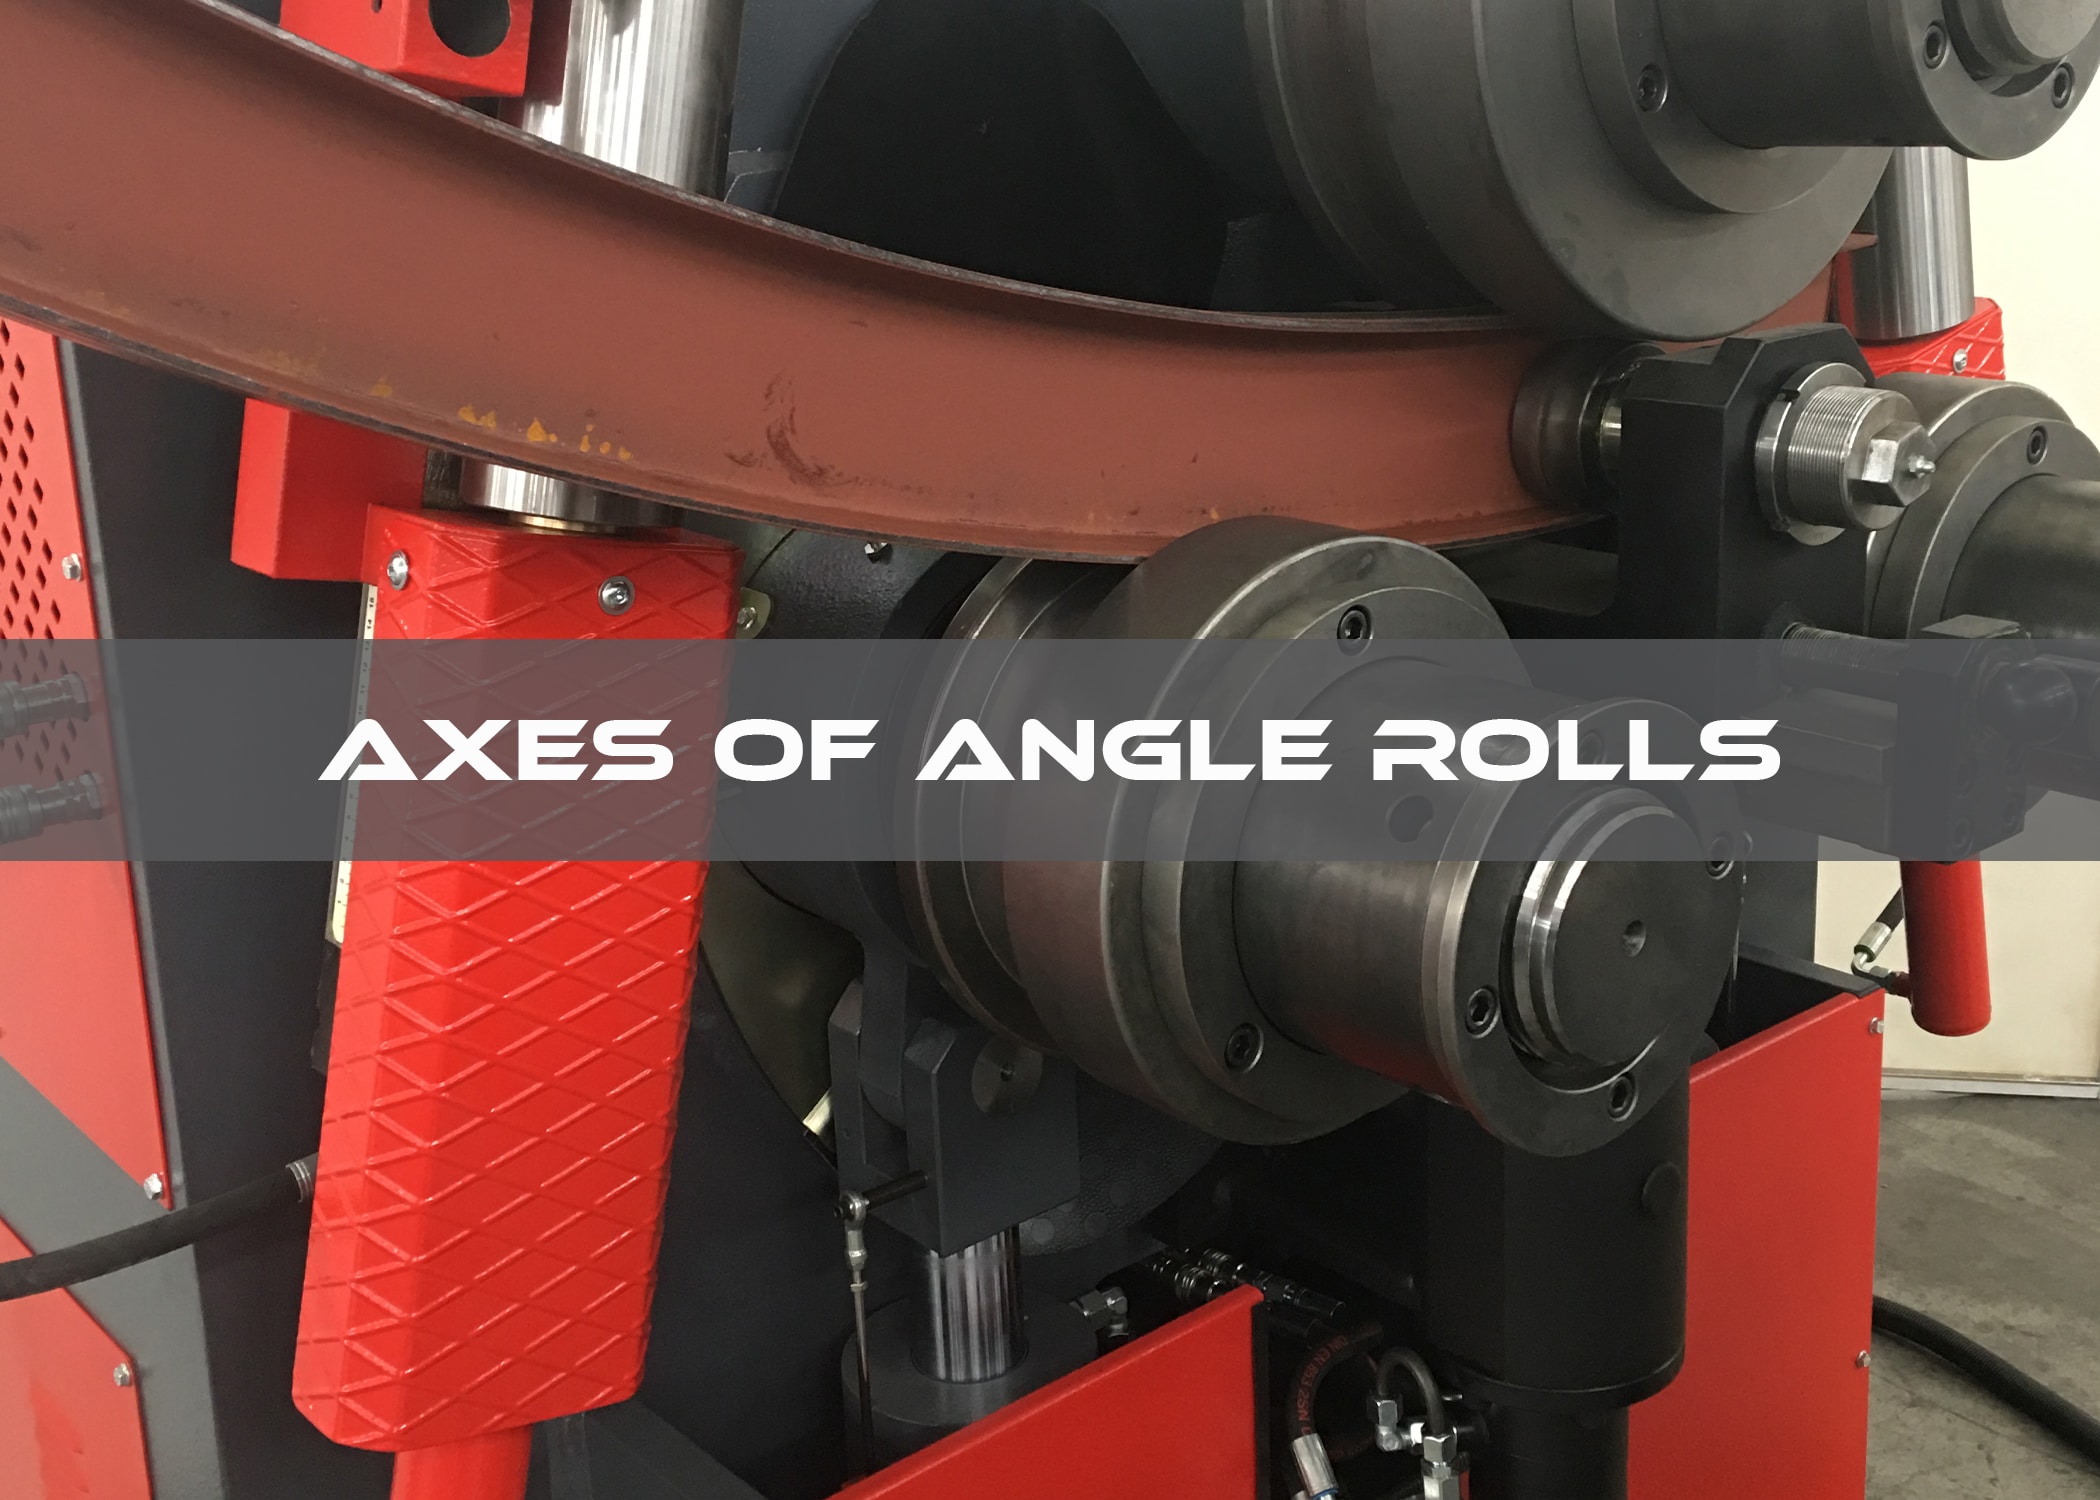 Axes of Angle Rolls